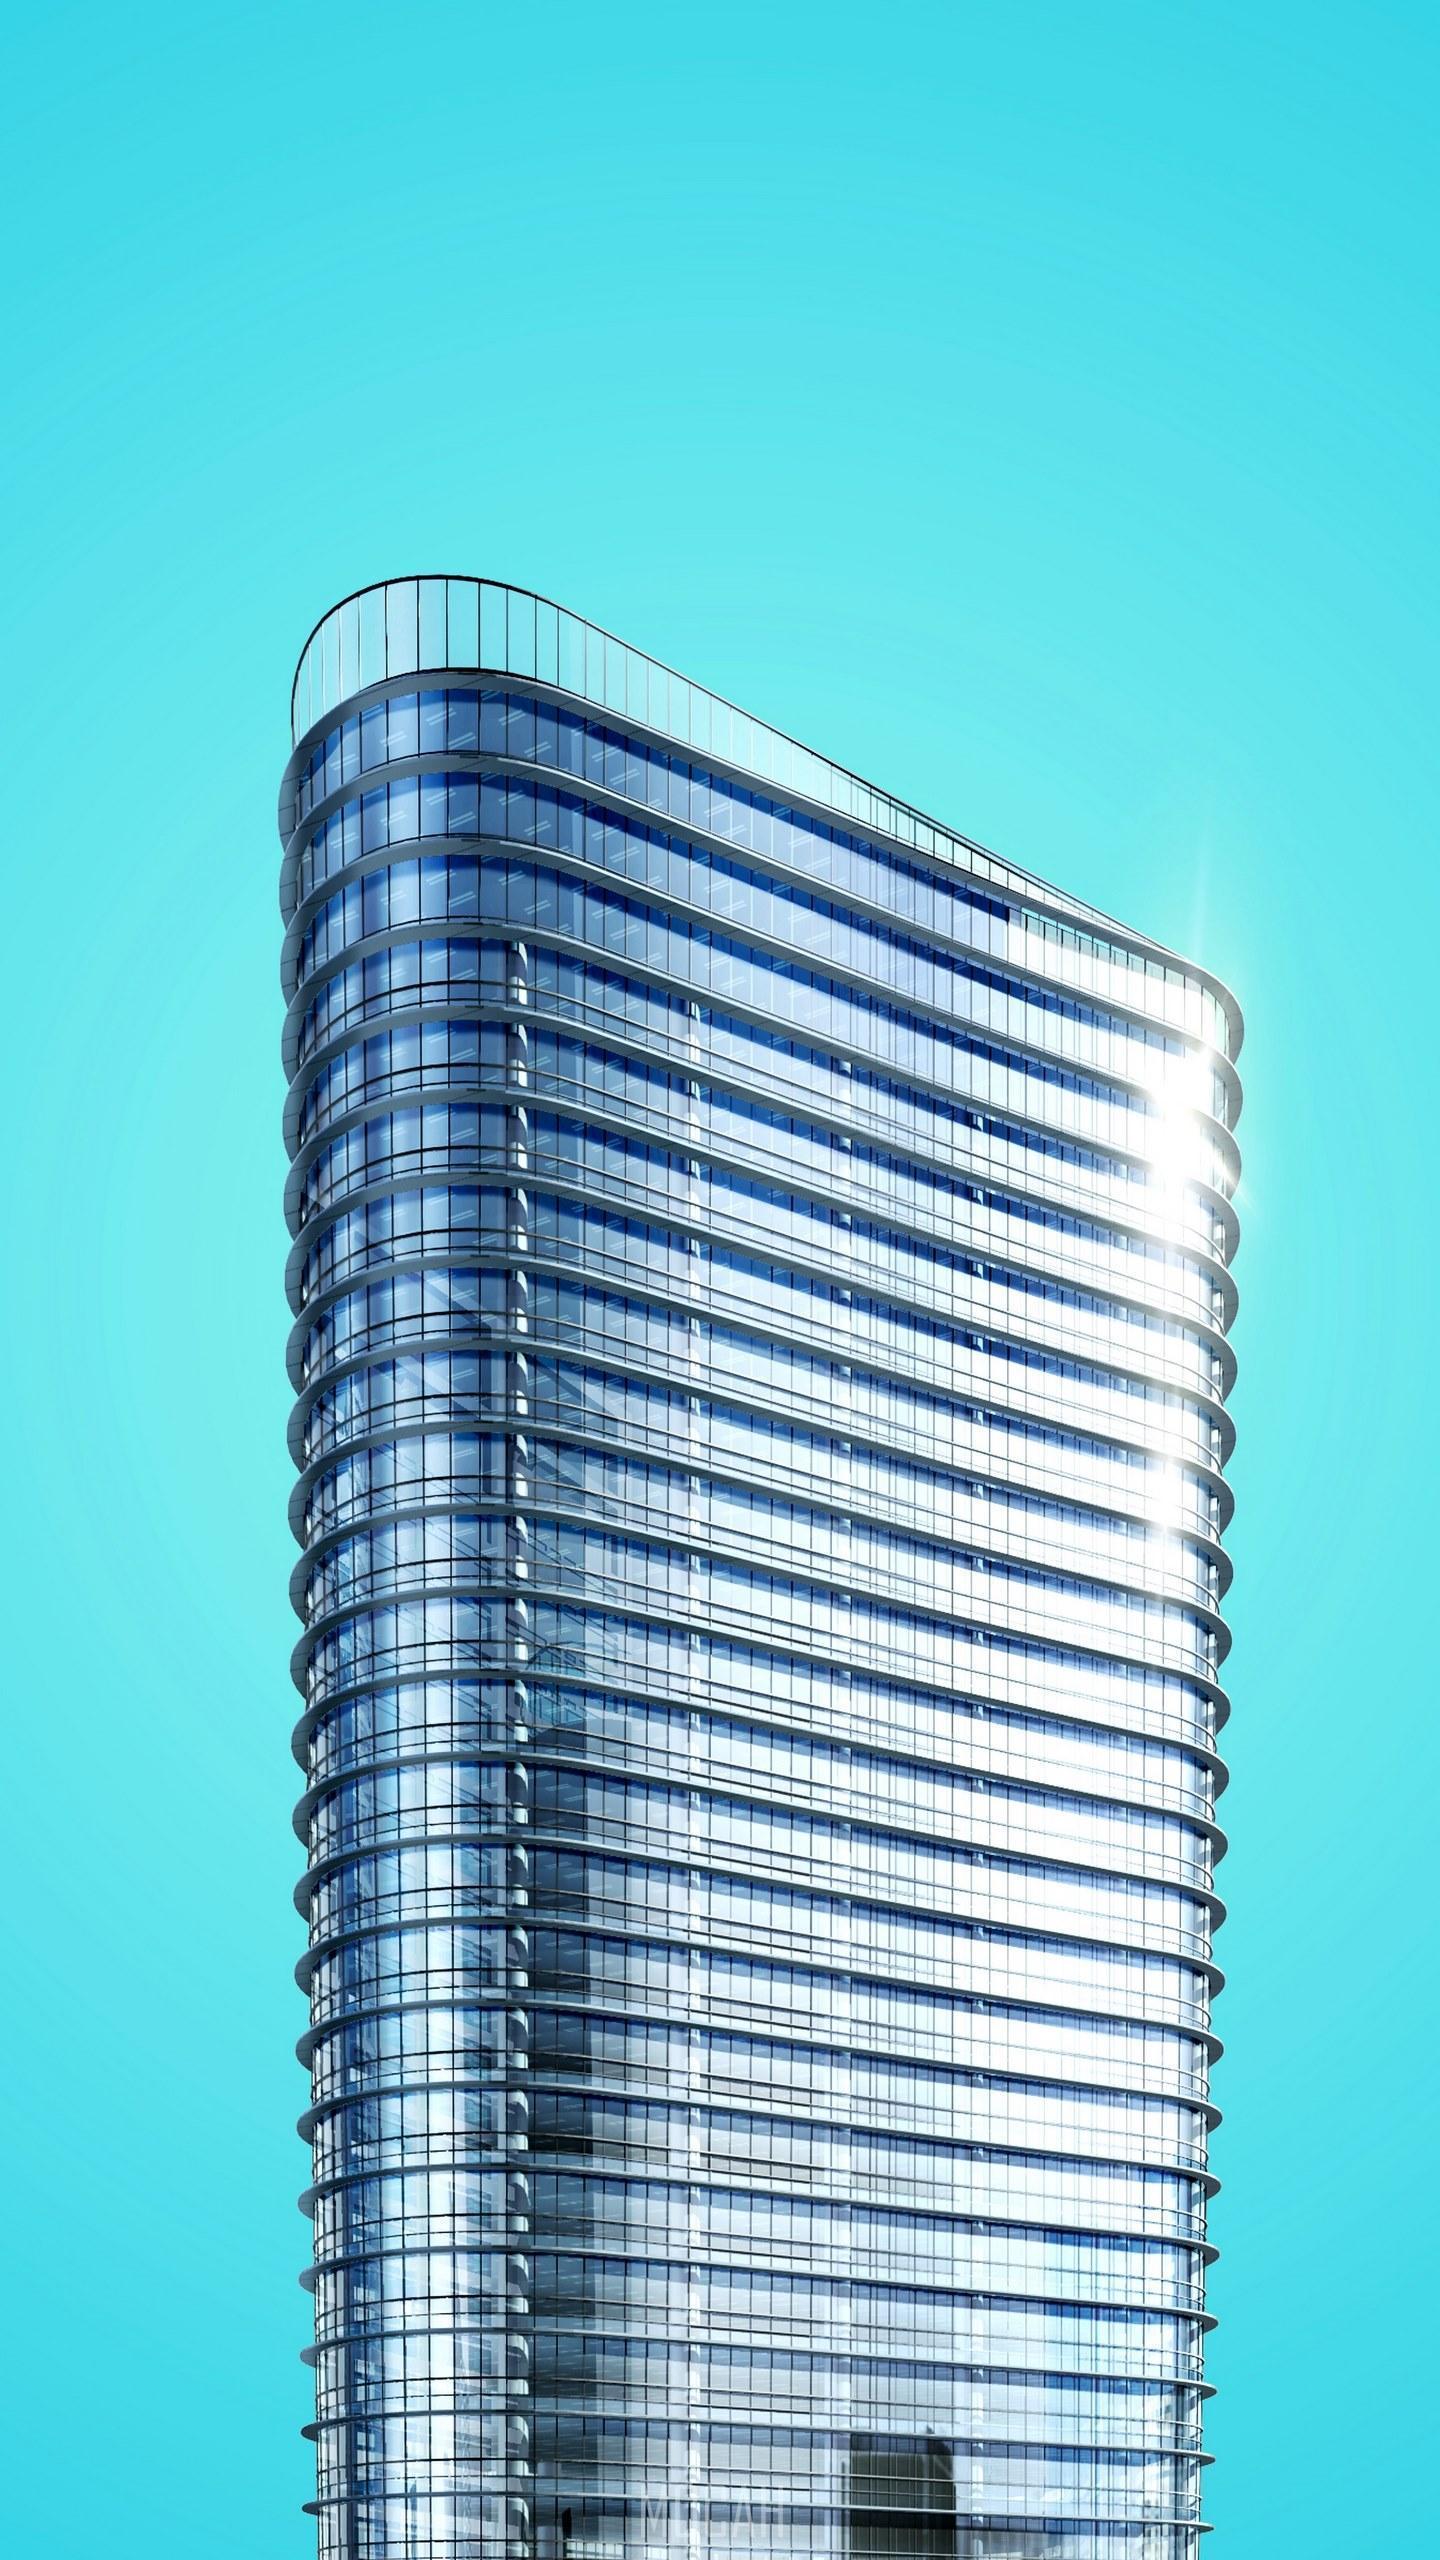 HD wallpaper, Htc 10 Evo Screensaver Hd, A Modern Skyscraper With A Round Facade Against A Blue Sky, Contemporary Skyscraper, 1440X2560